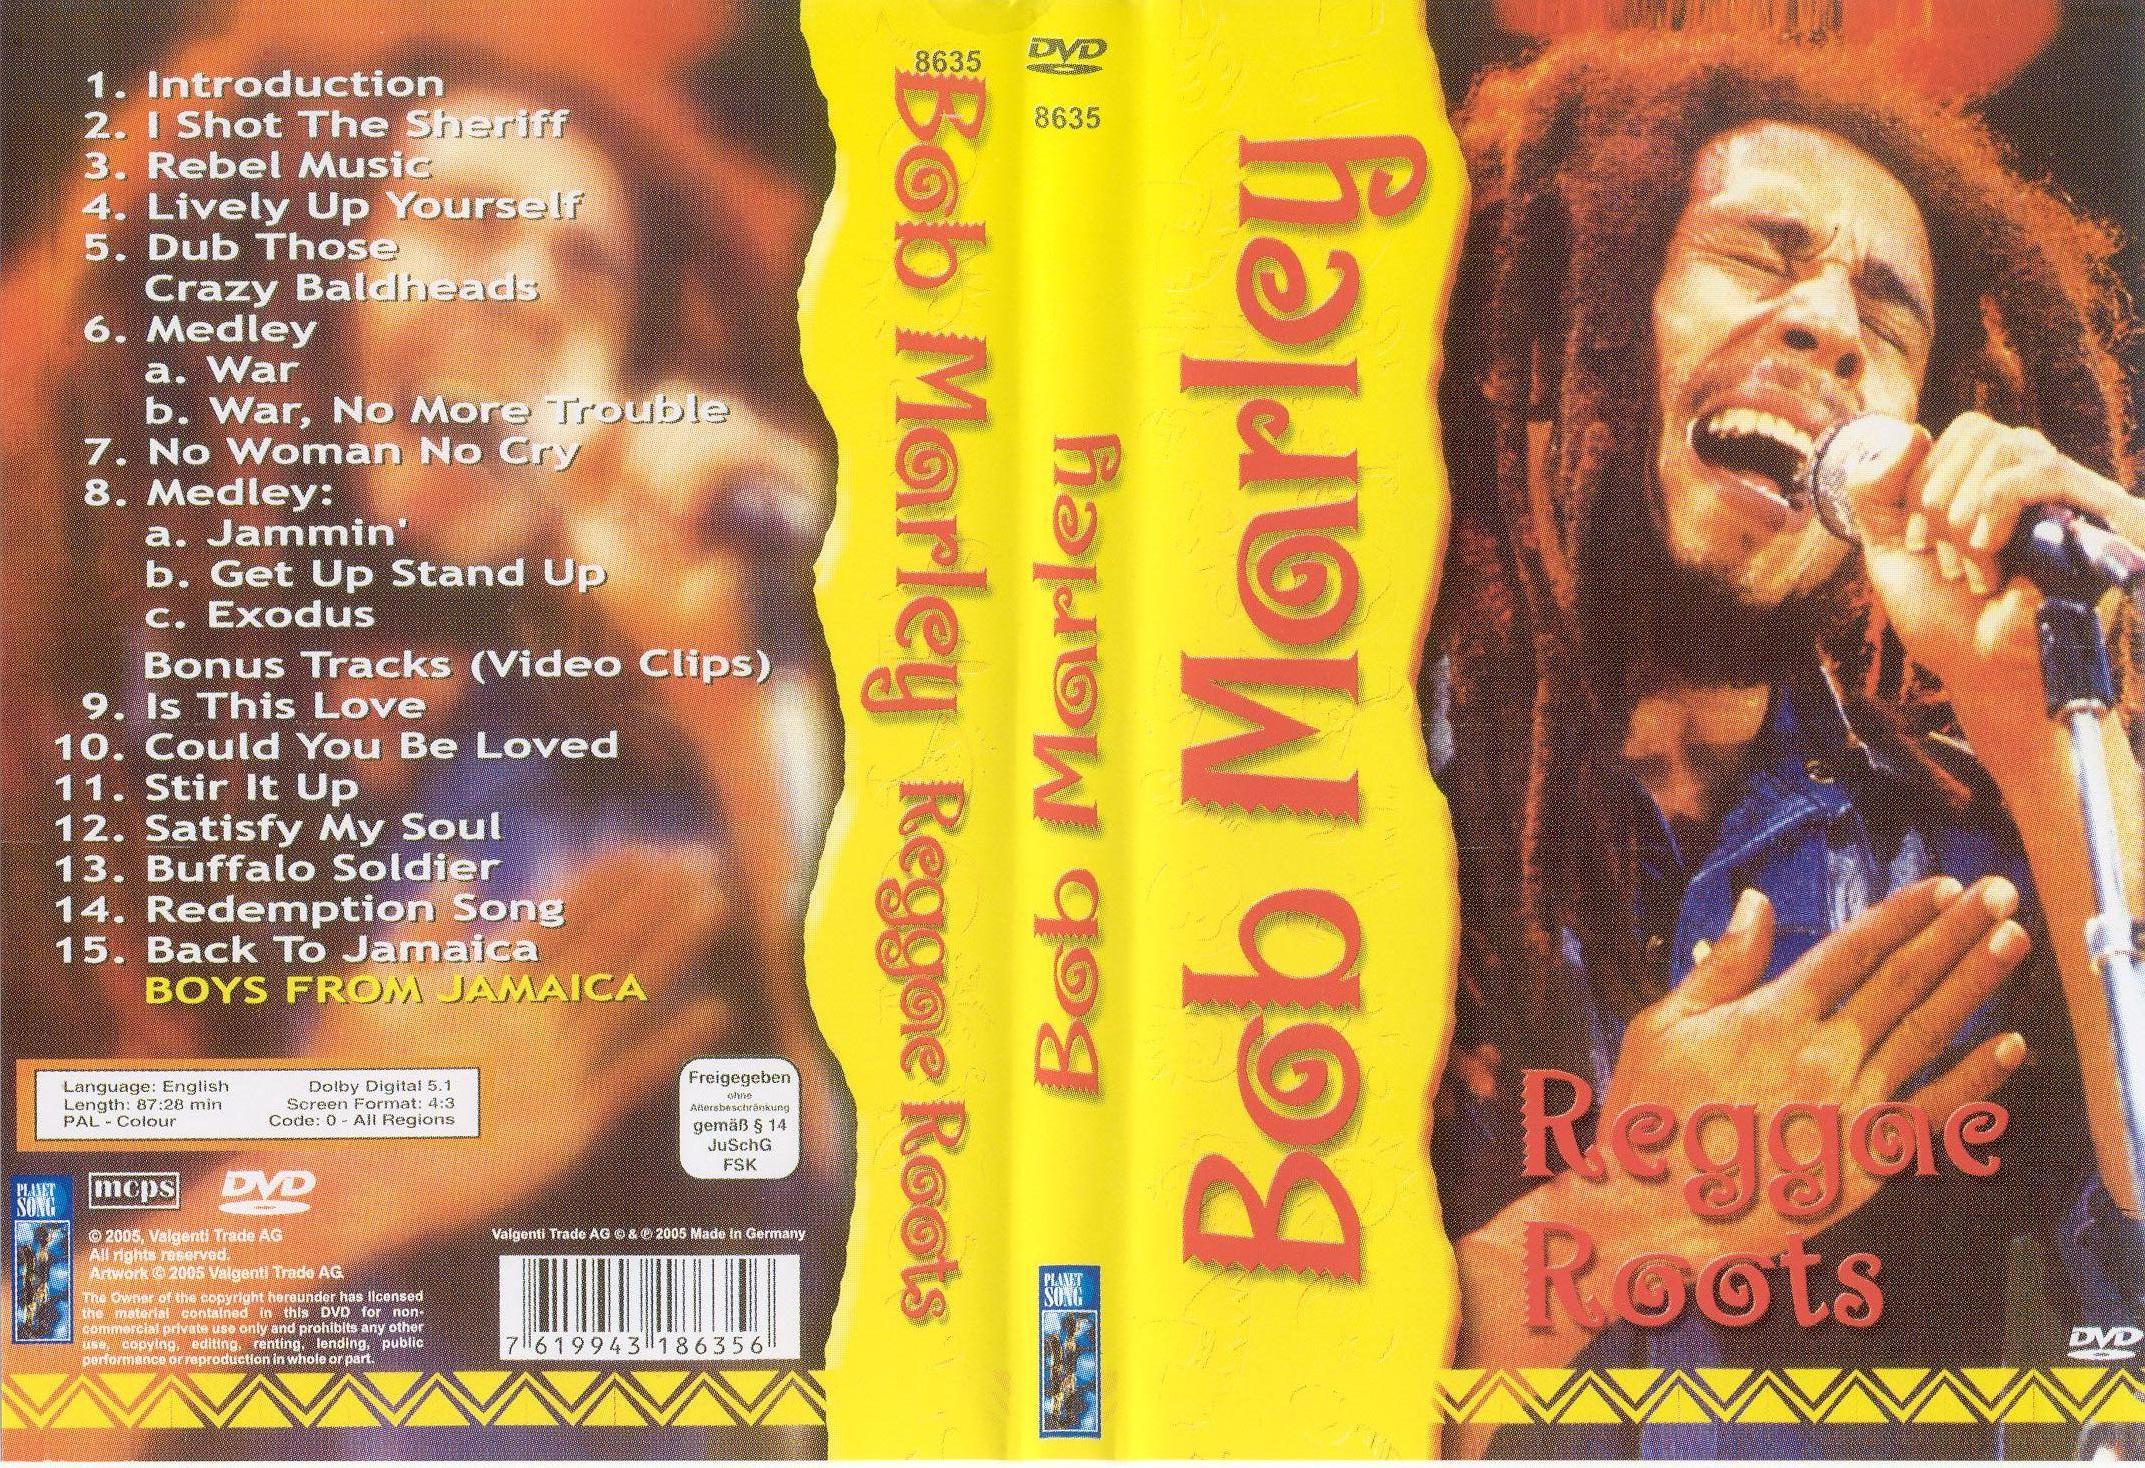 Jaquette DVD Bob Marley Reggae Roots